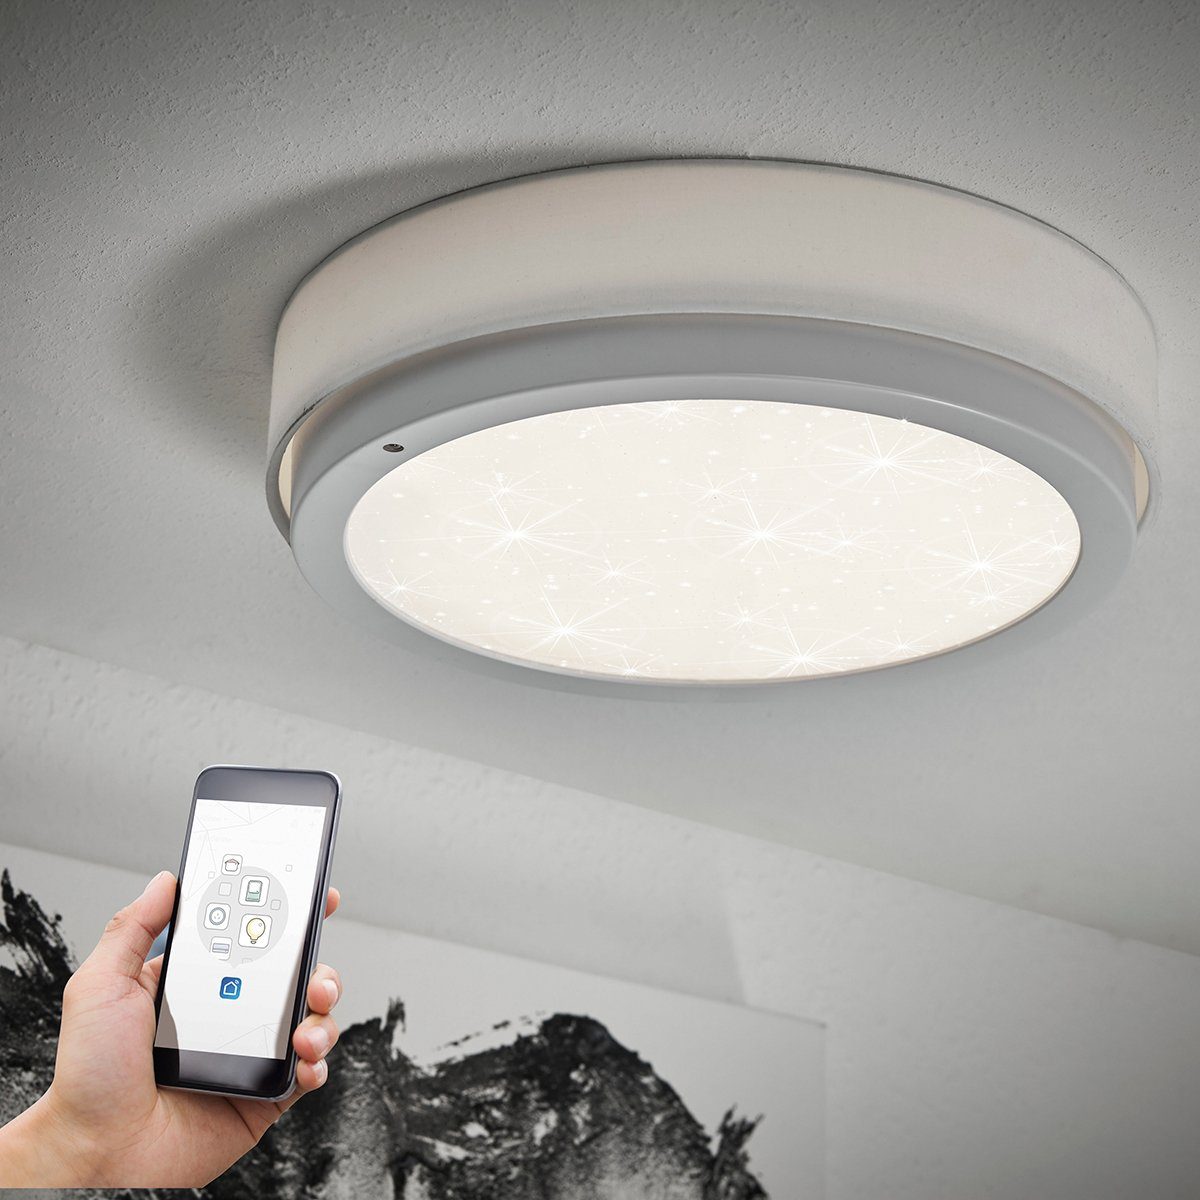 MeLiTec LED Deckenleuchte D112, LED fest integriert, warmweiß - kaltweiß, LED  Leuchte Smart Home Wand Deckenleuchte Wandlampe creme-weiß 32x8 cm | Deckenlampen